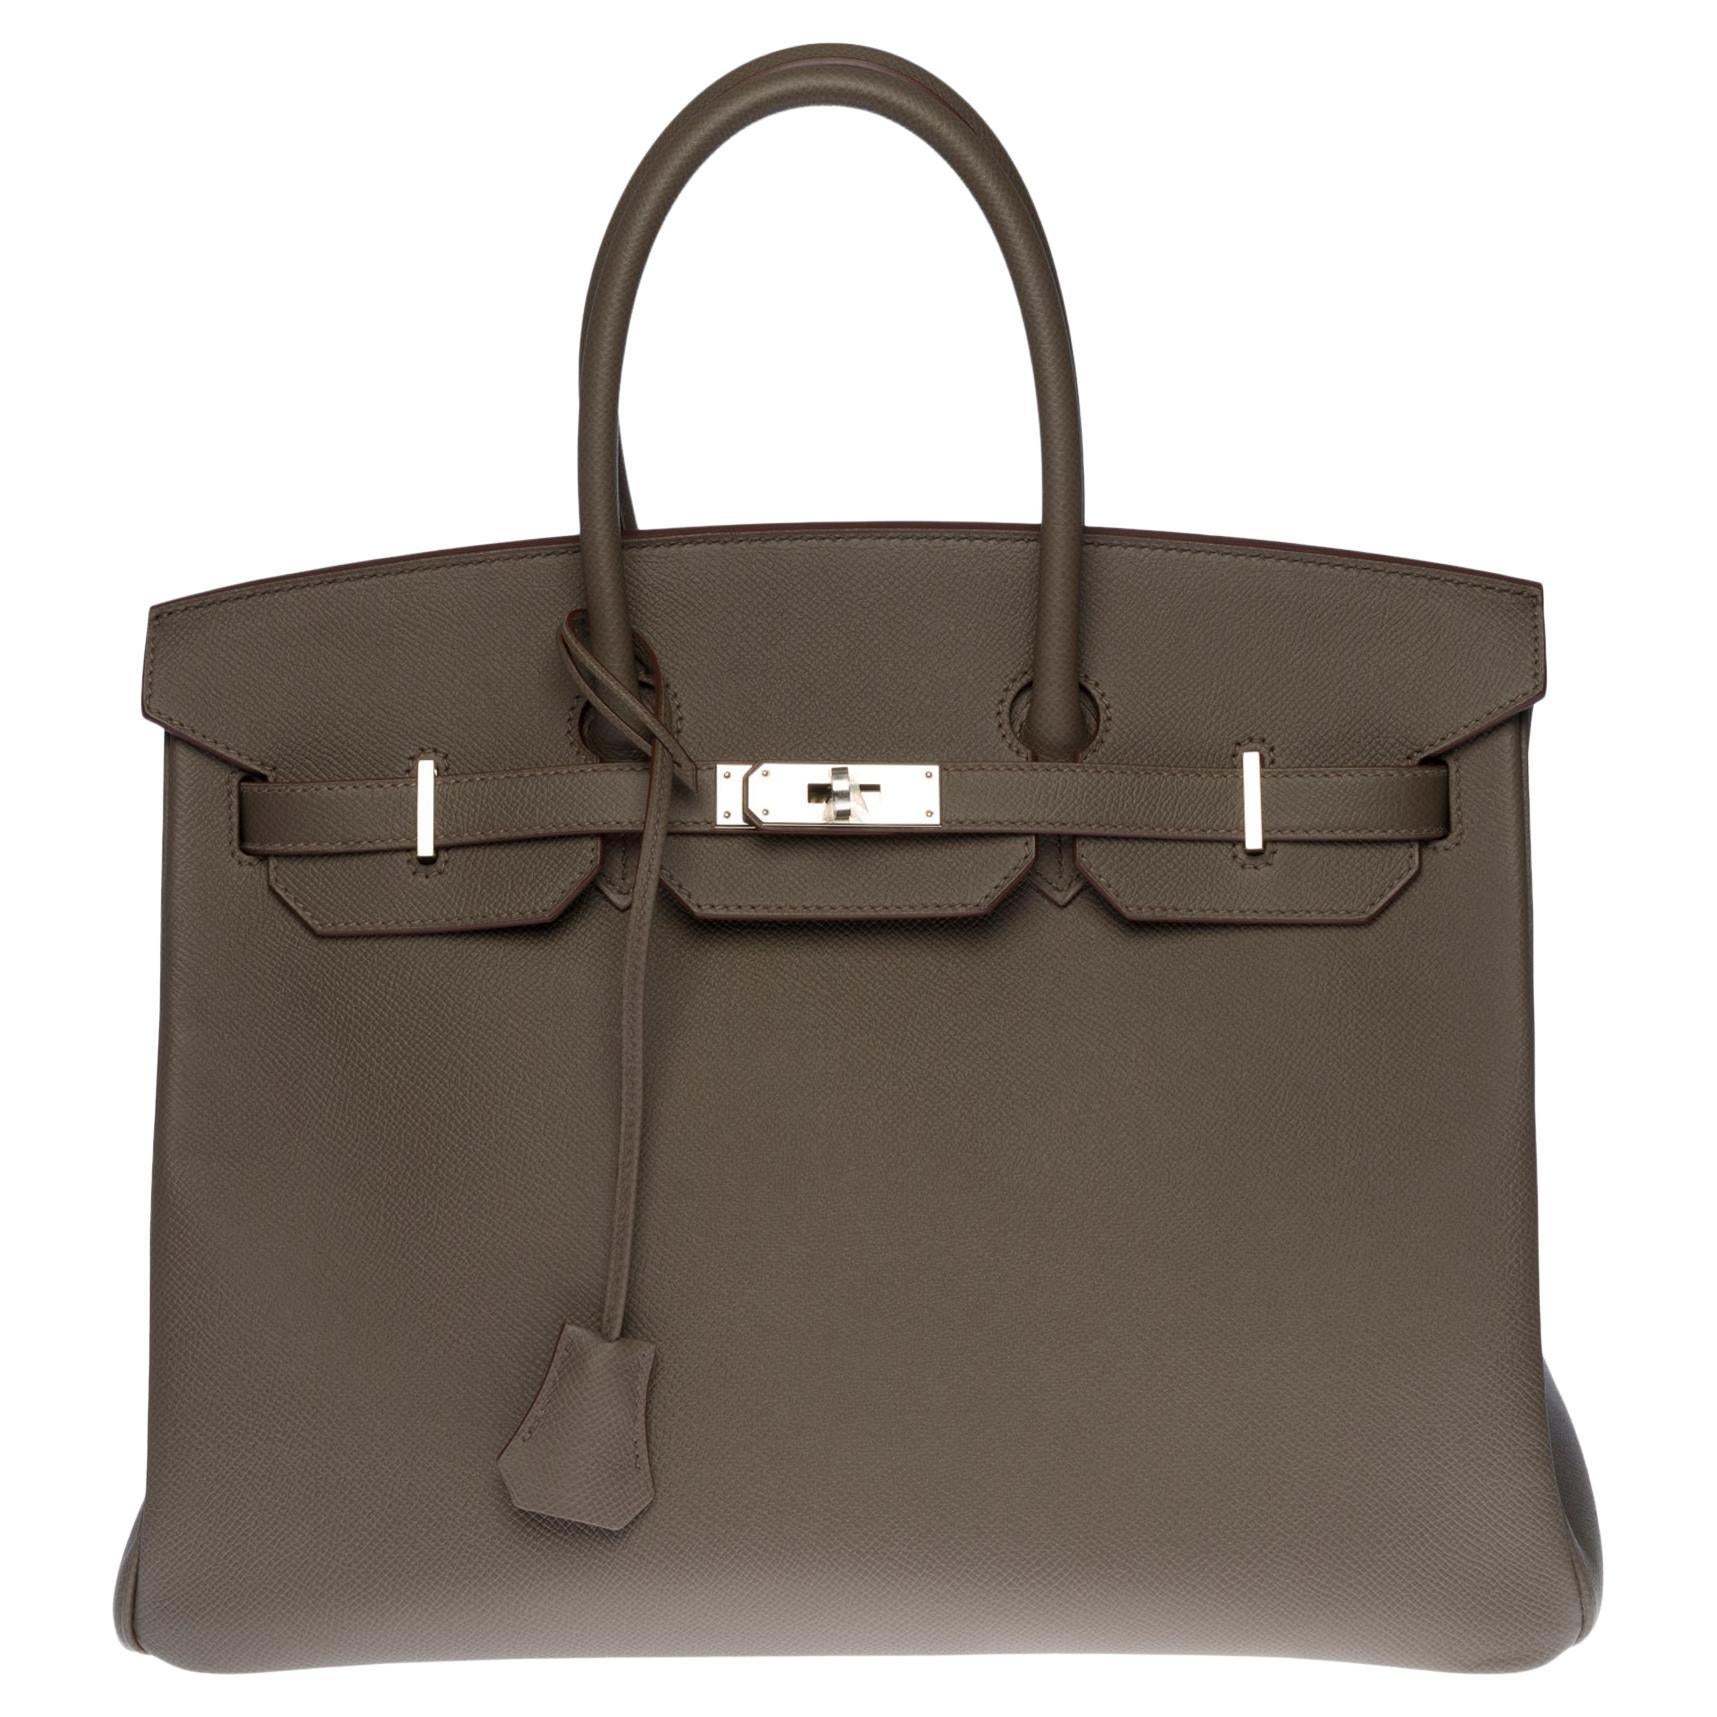 Brand New -Full set-Hermès Birkin 35 handbag in Etain Epsom leather, SHW